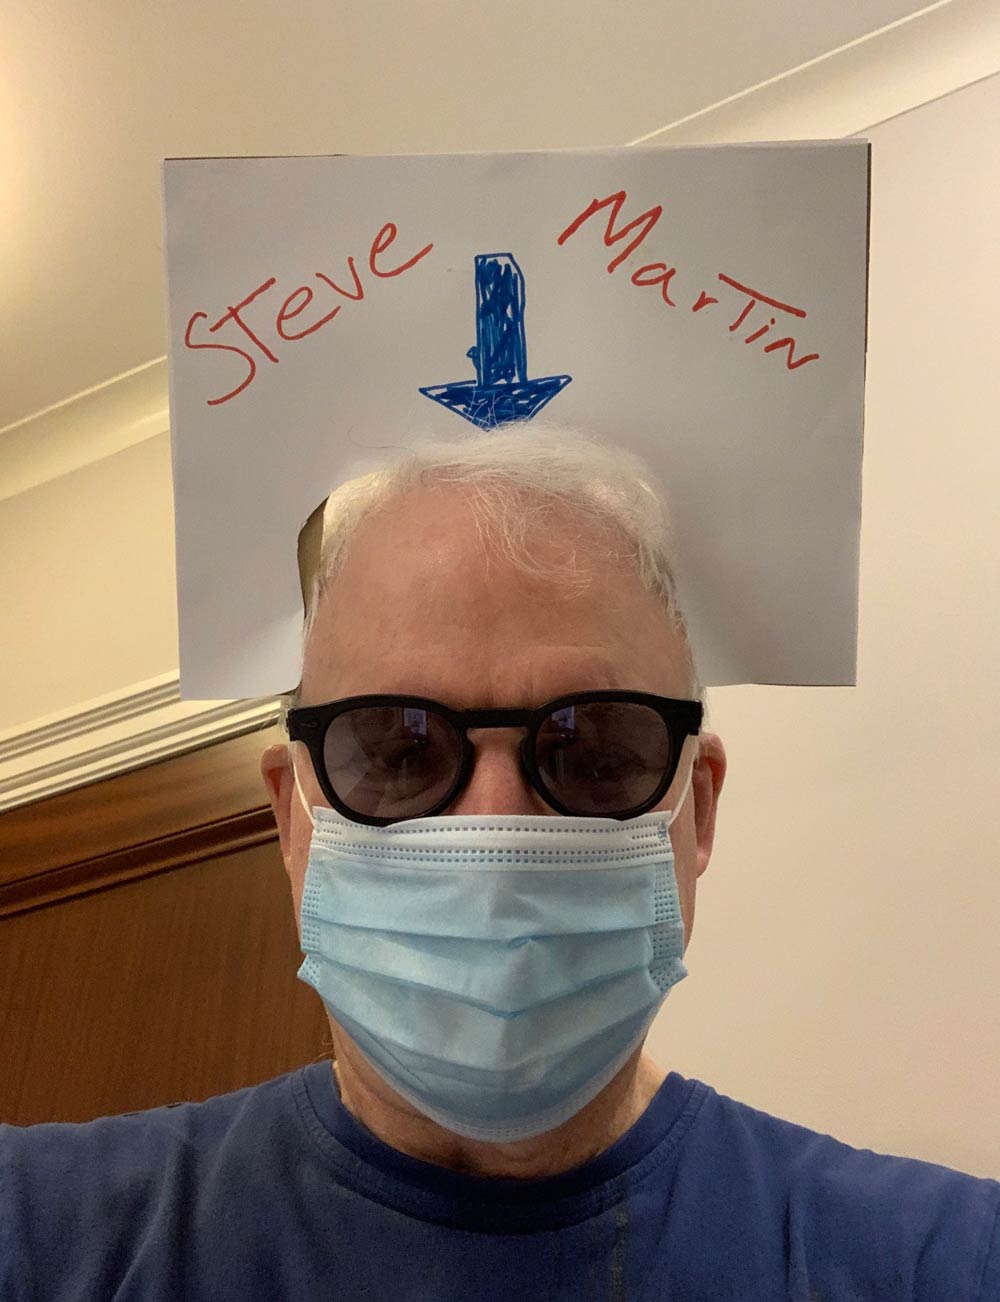 Steve Martin solves the "mask problem"